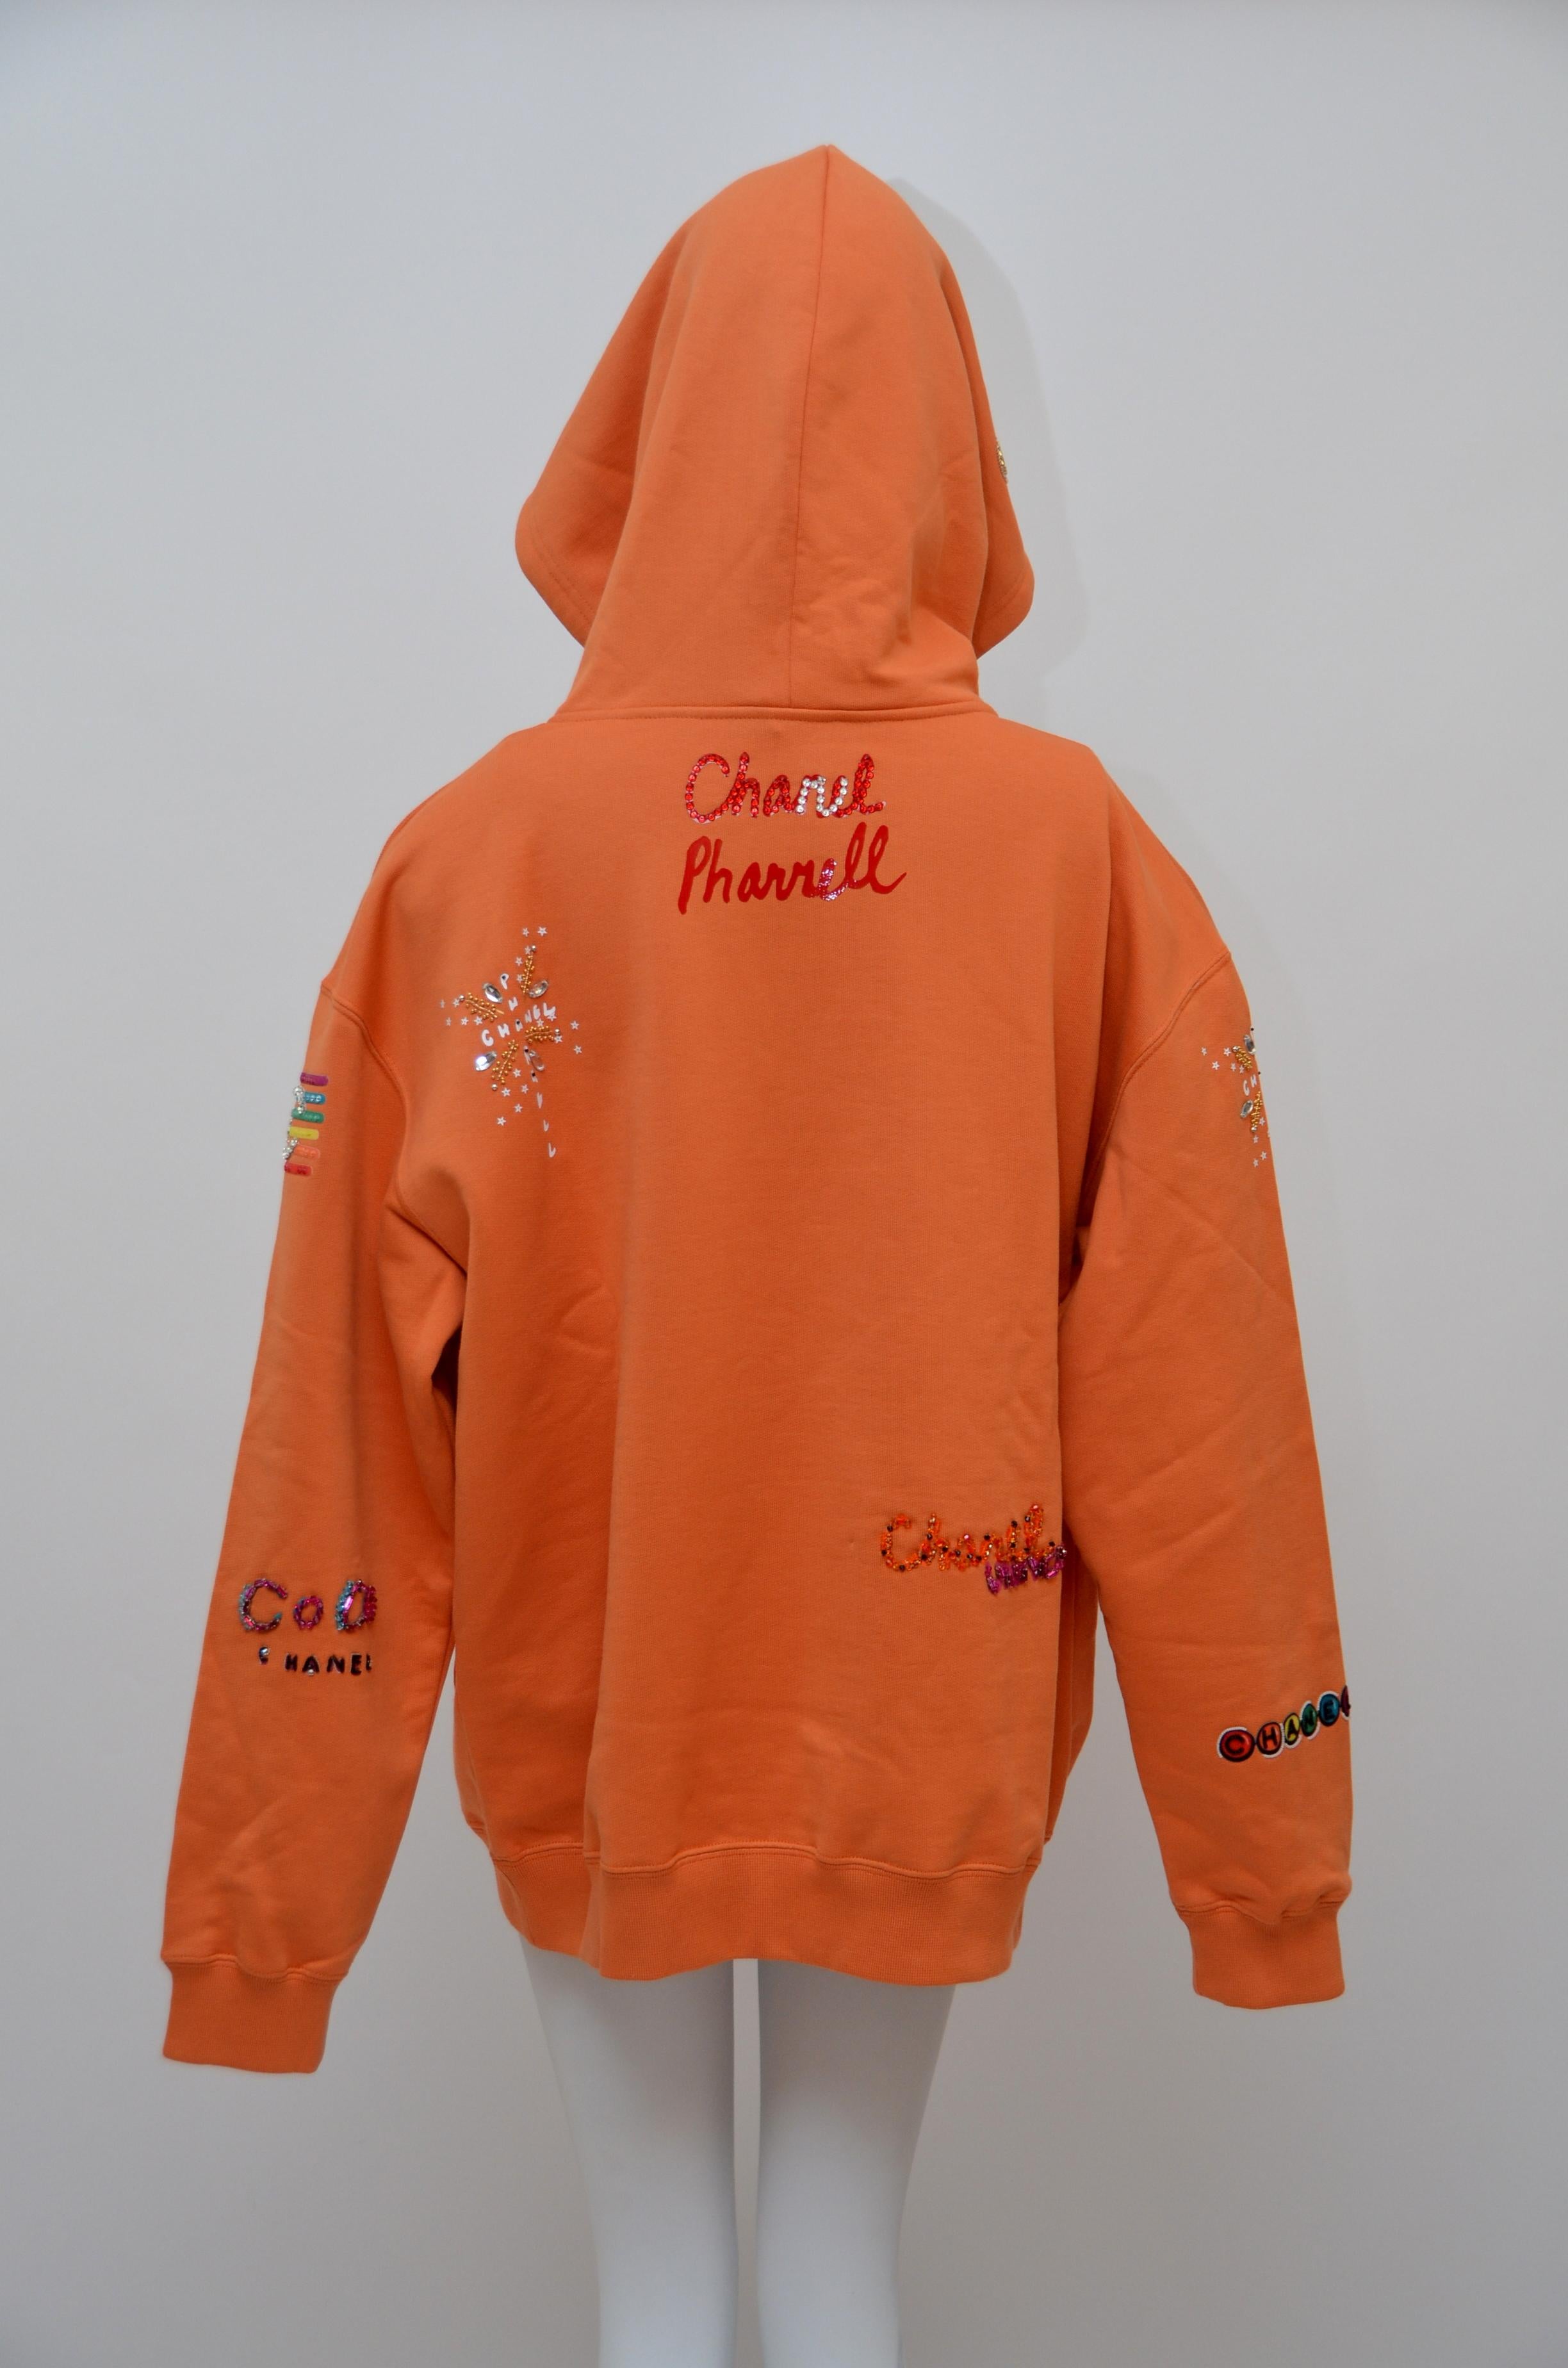 chanel pharrell hoodie price